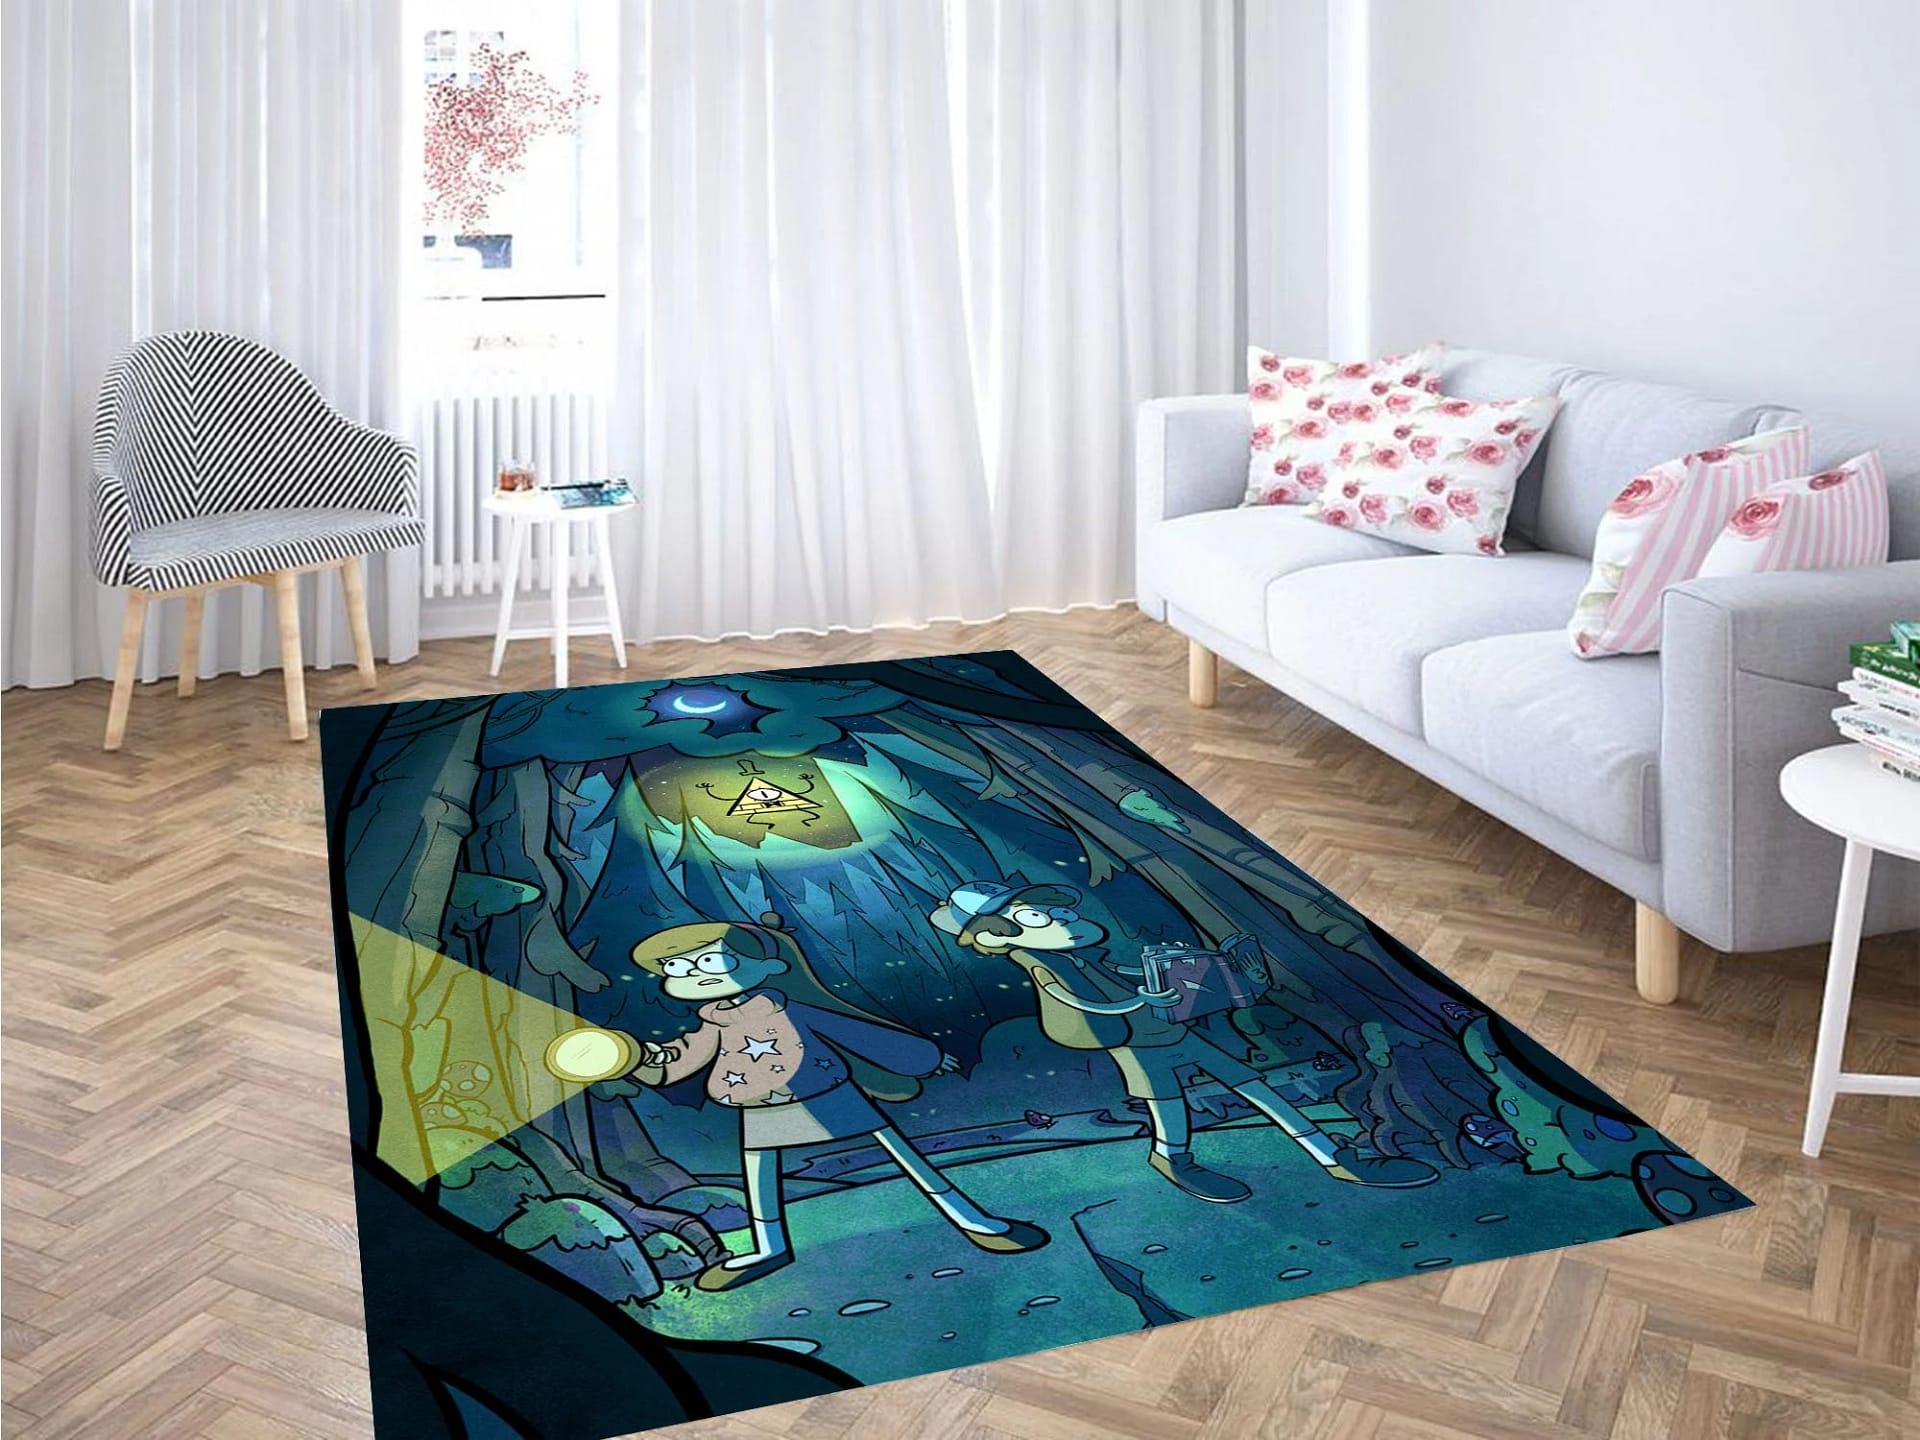 Gravity Falls In The Night Carpet Rug